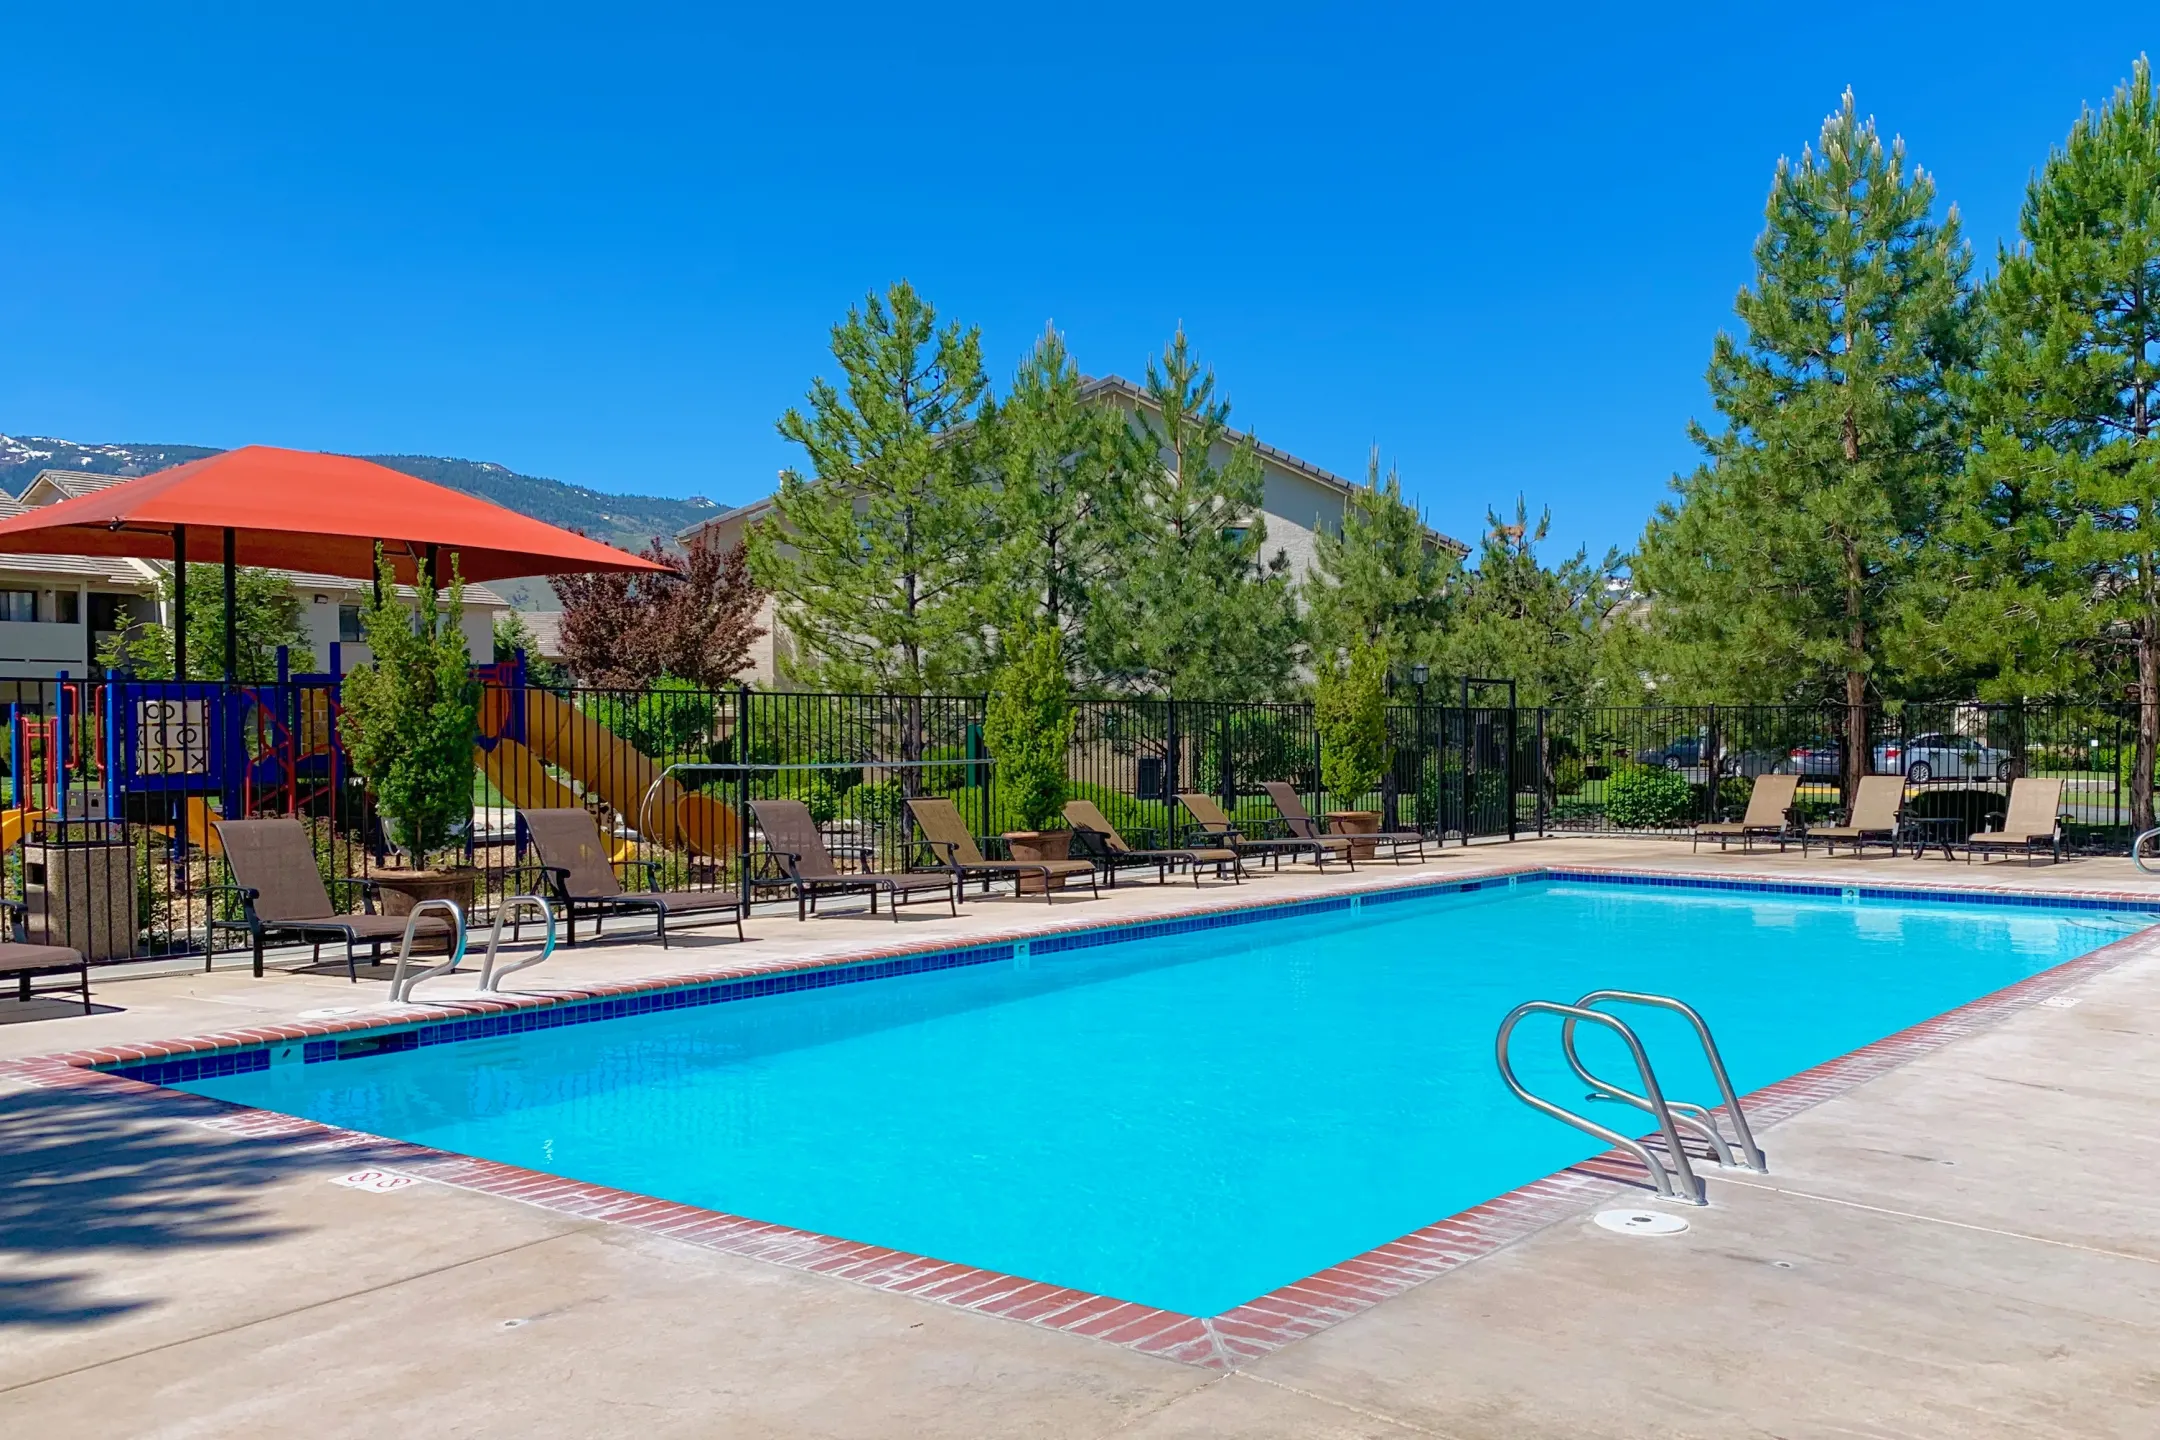 Pool - Sharlands Terrace - Reno, NV